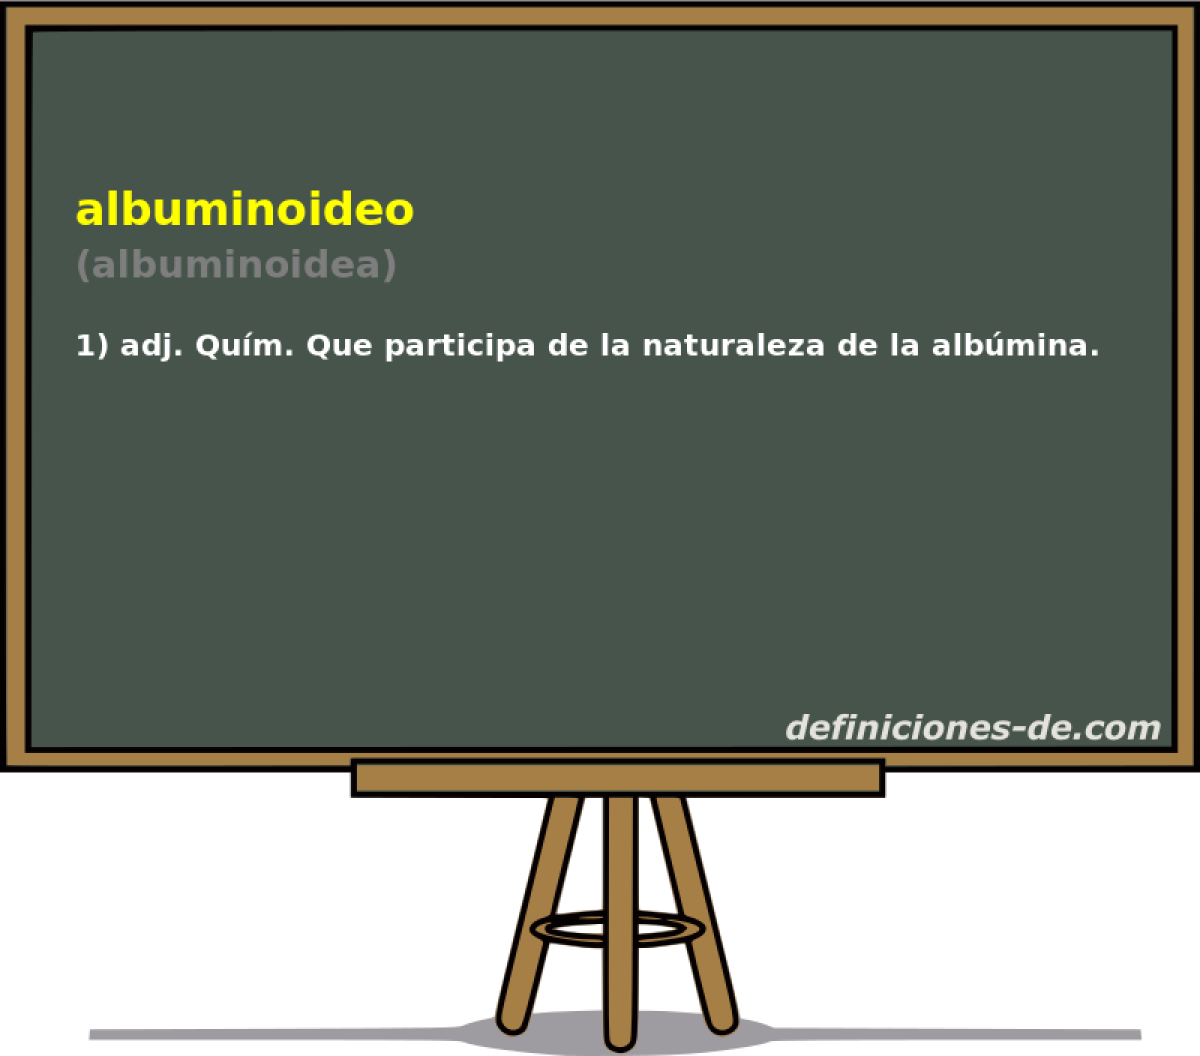 albuminoideo (albuminoidea)